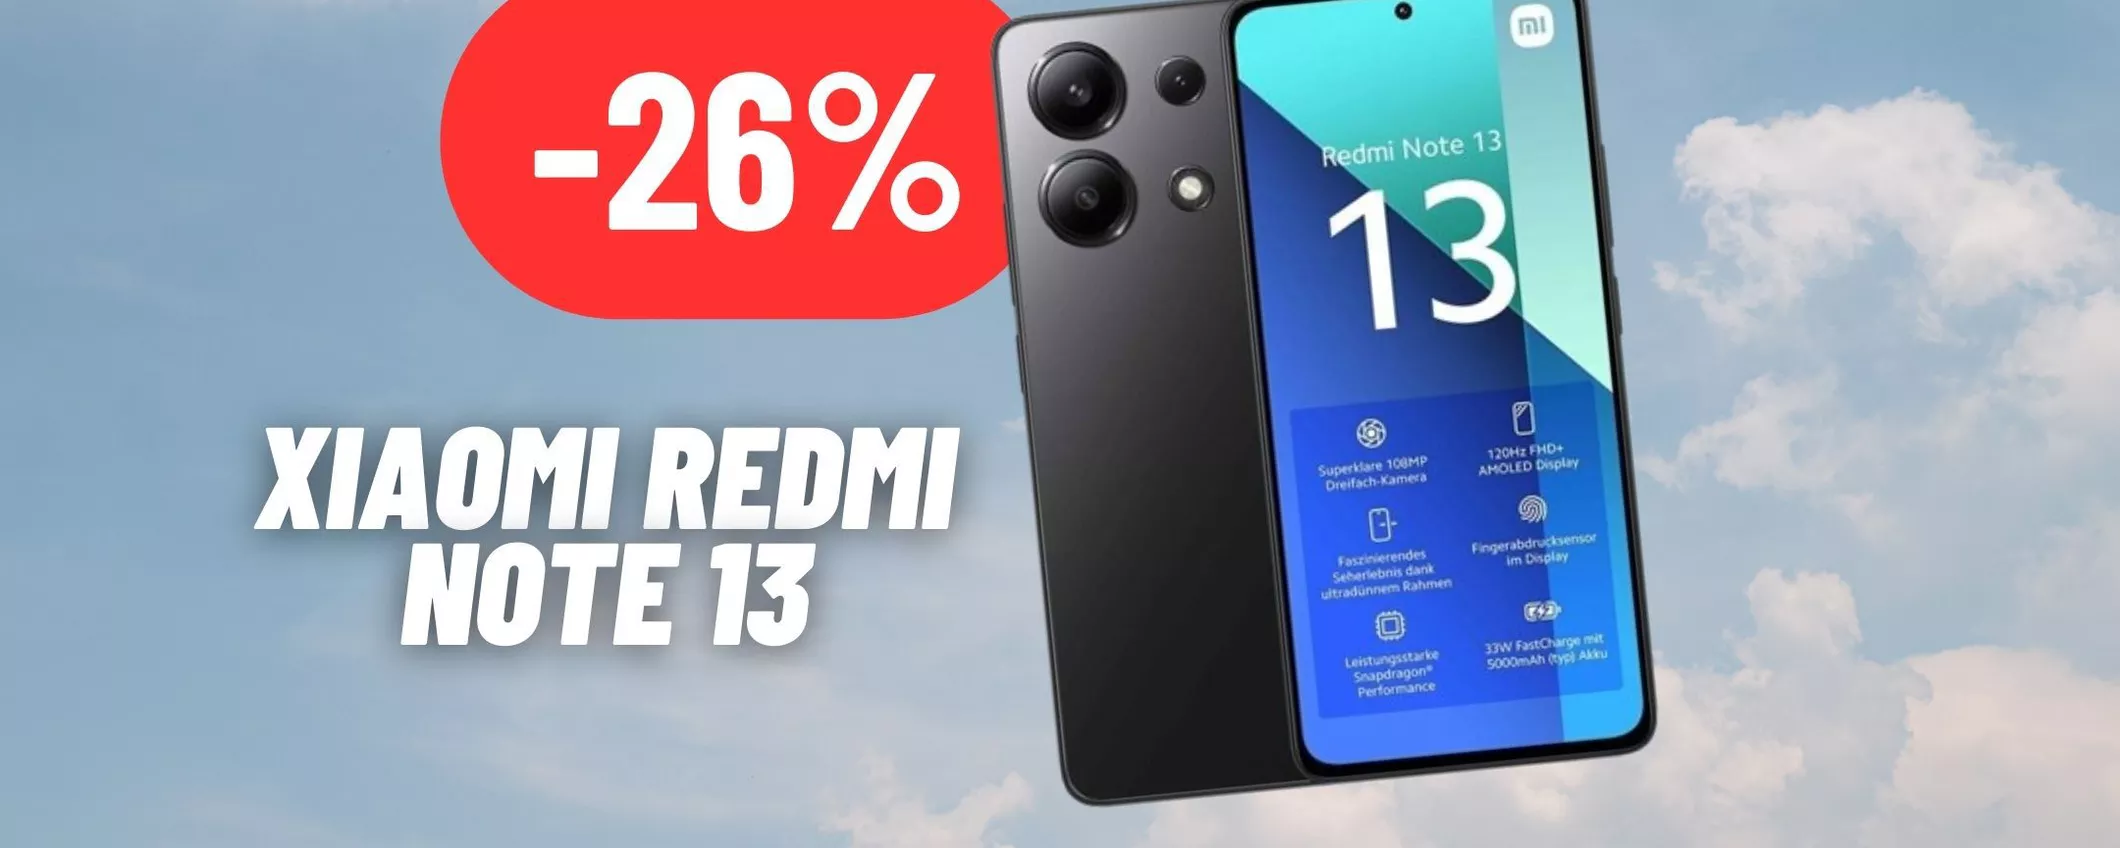 Xiaomi Redmi Note 13: smartphone eccellente a soli 148€, FOLLIA eBay